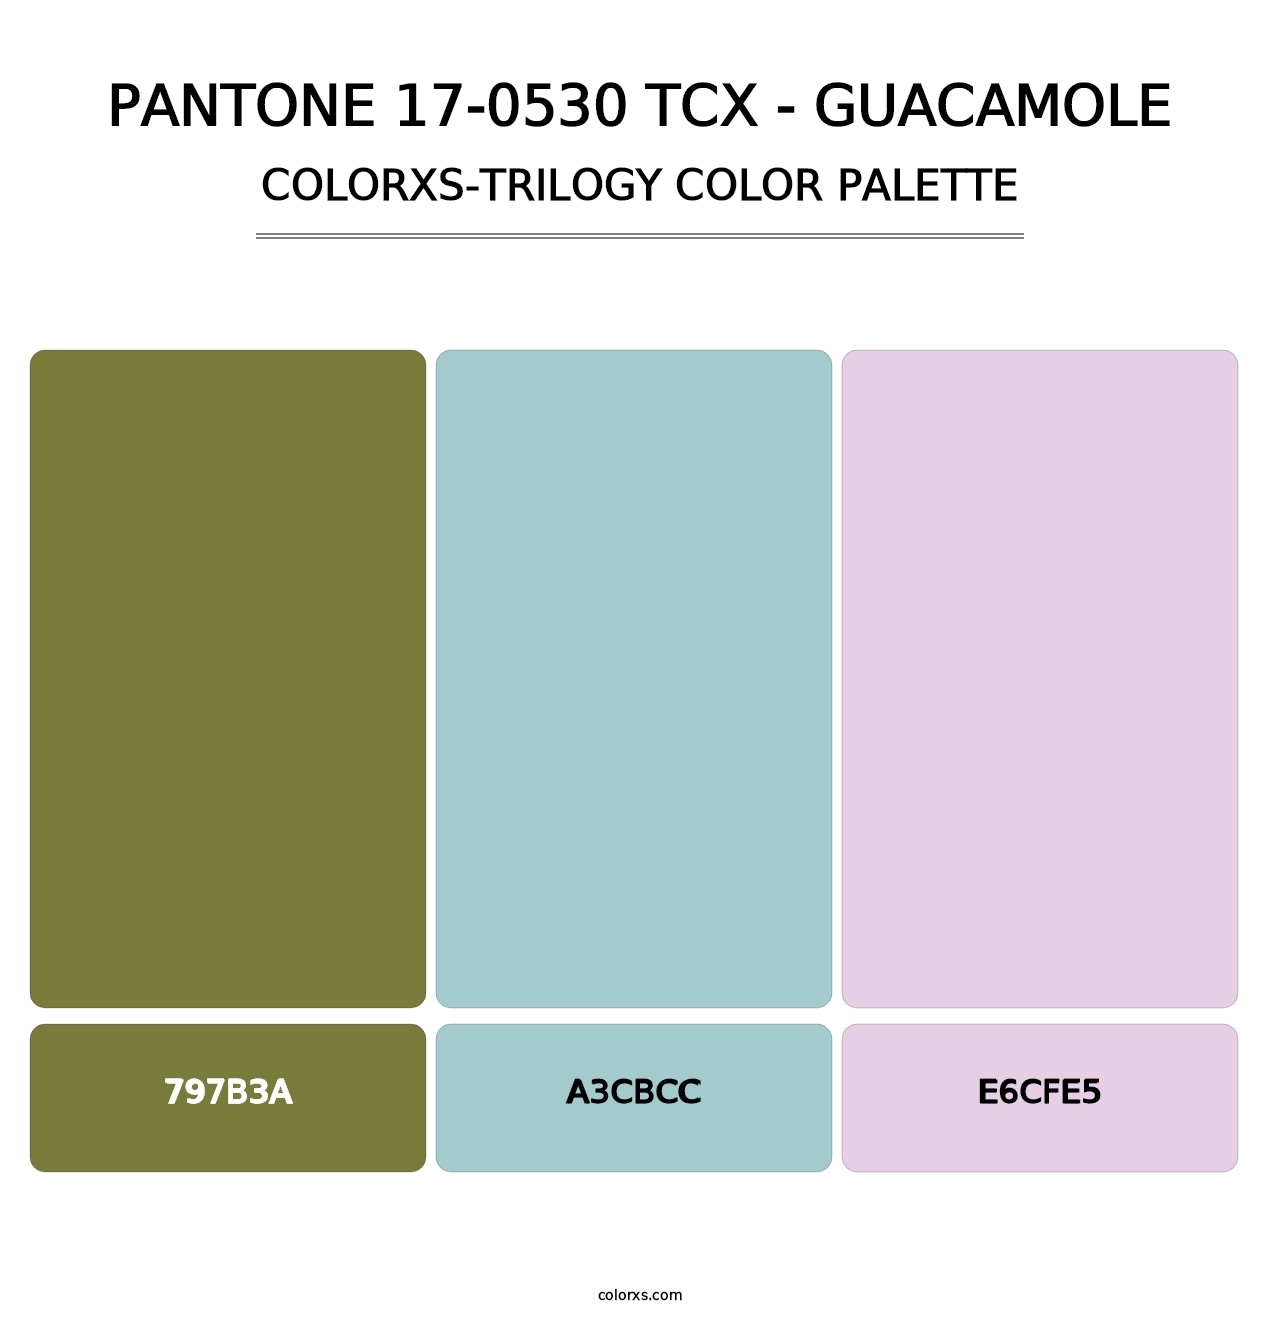 PANTONE 17-0530 TCX - Guacamole - Colorxs Trilogy Palette